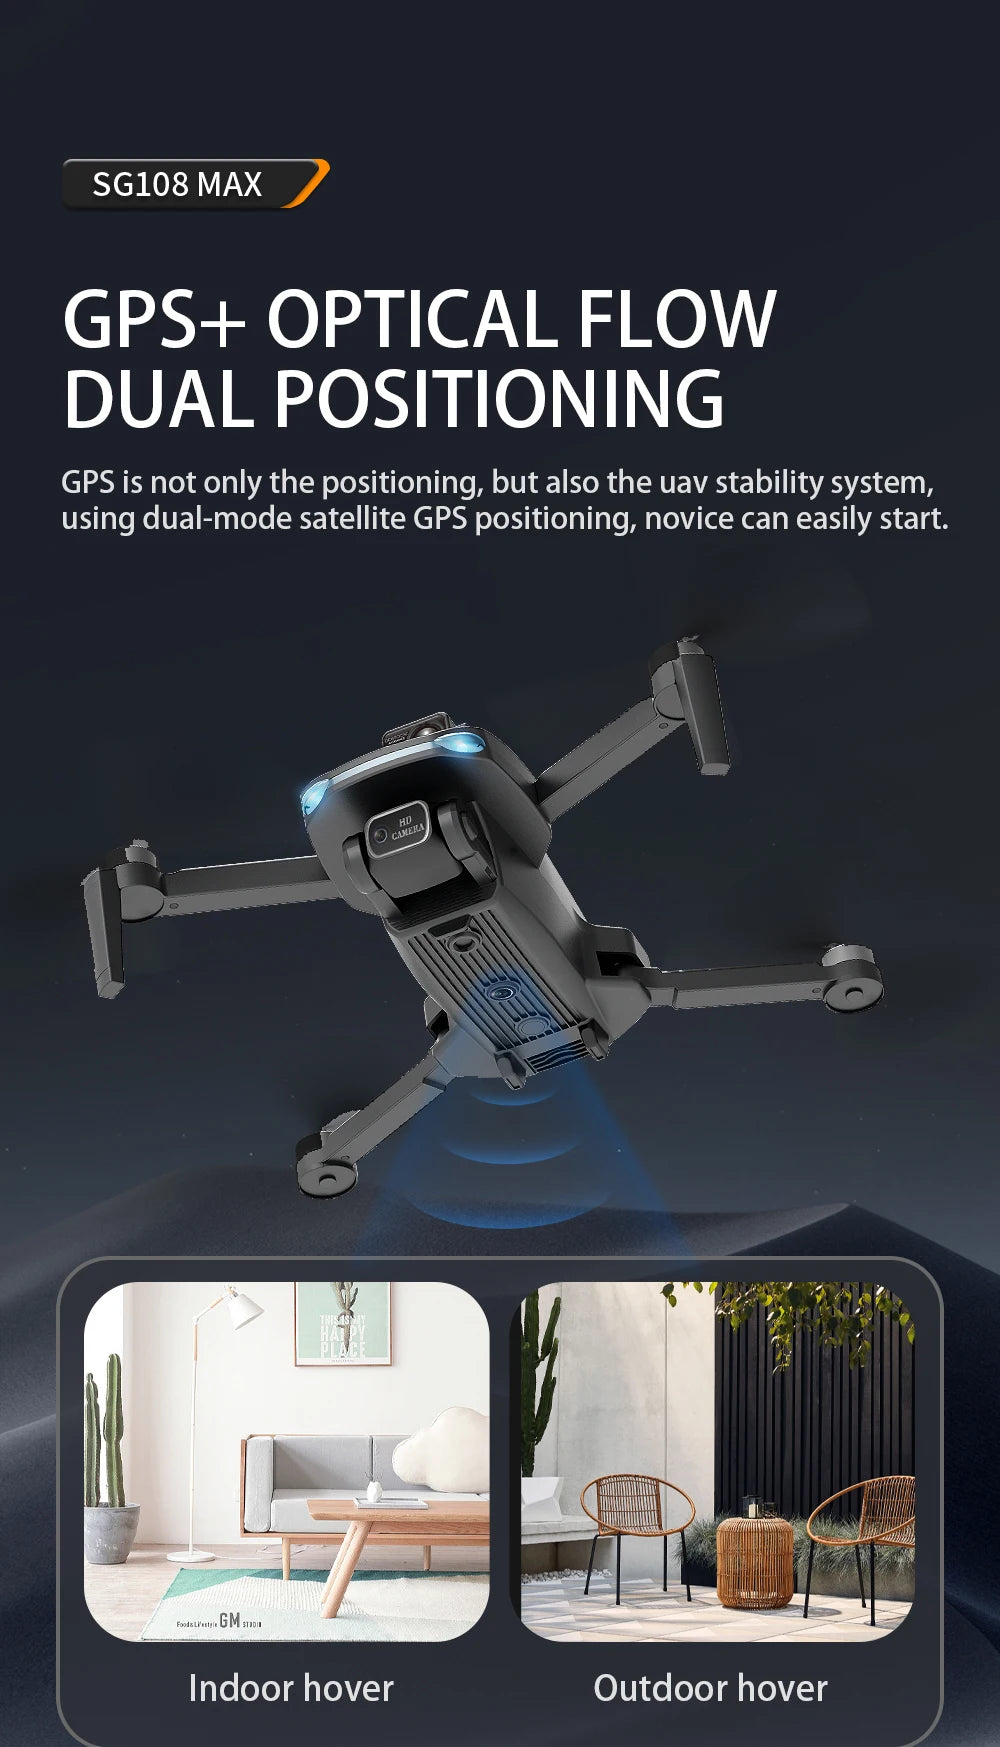 SG108 / SG108 Max Drone, SG108 MAX GPS+ OPTICAL FLOW DUAL POSITIONING